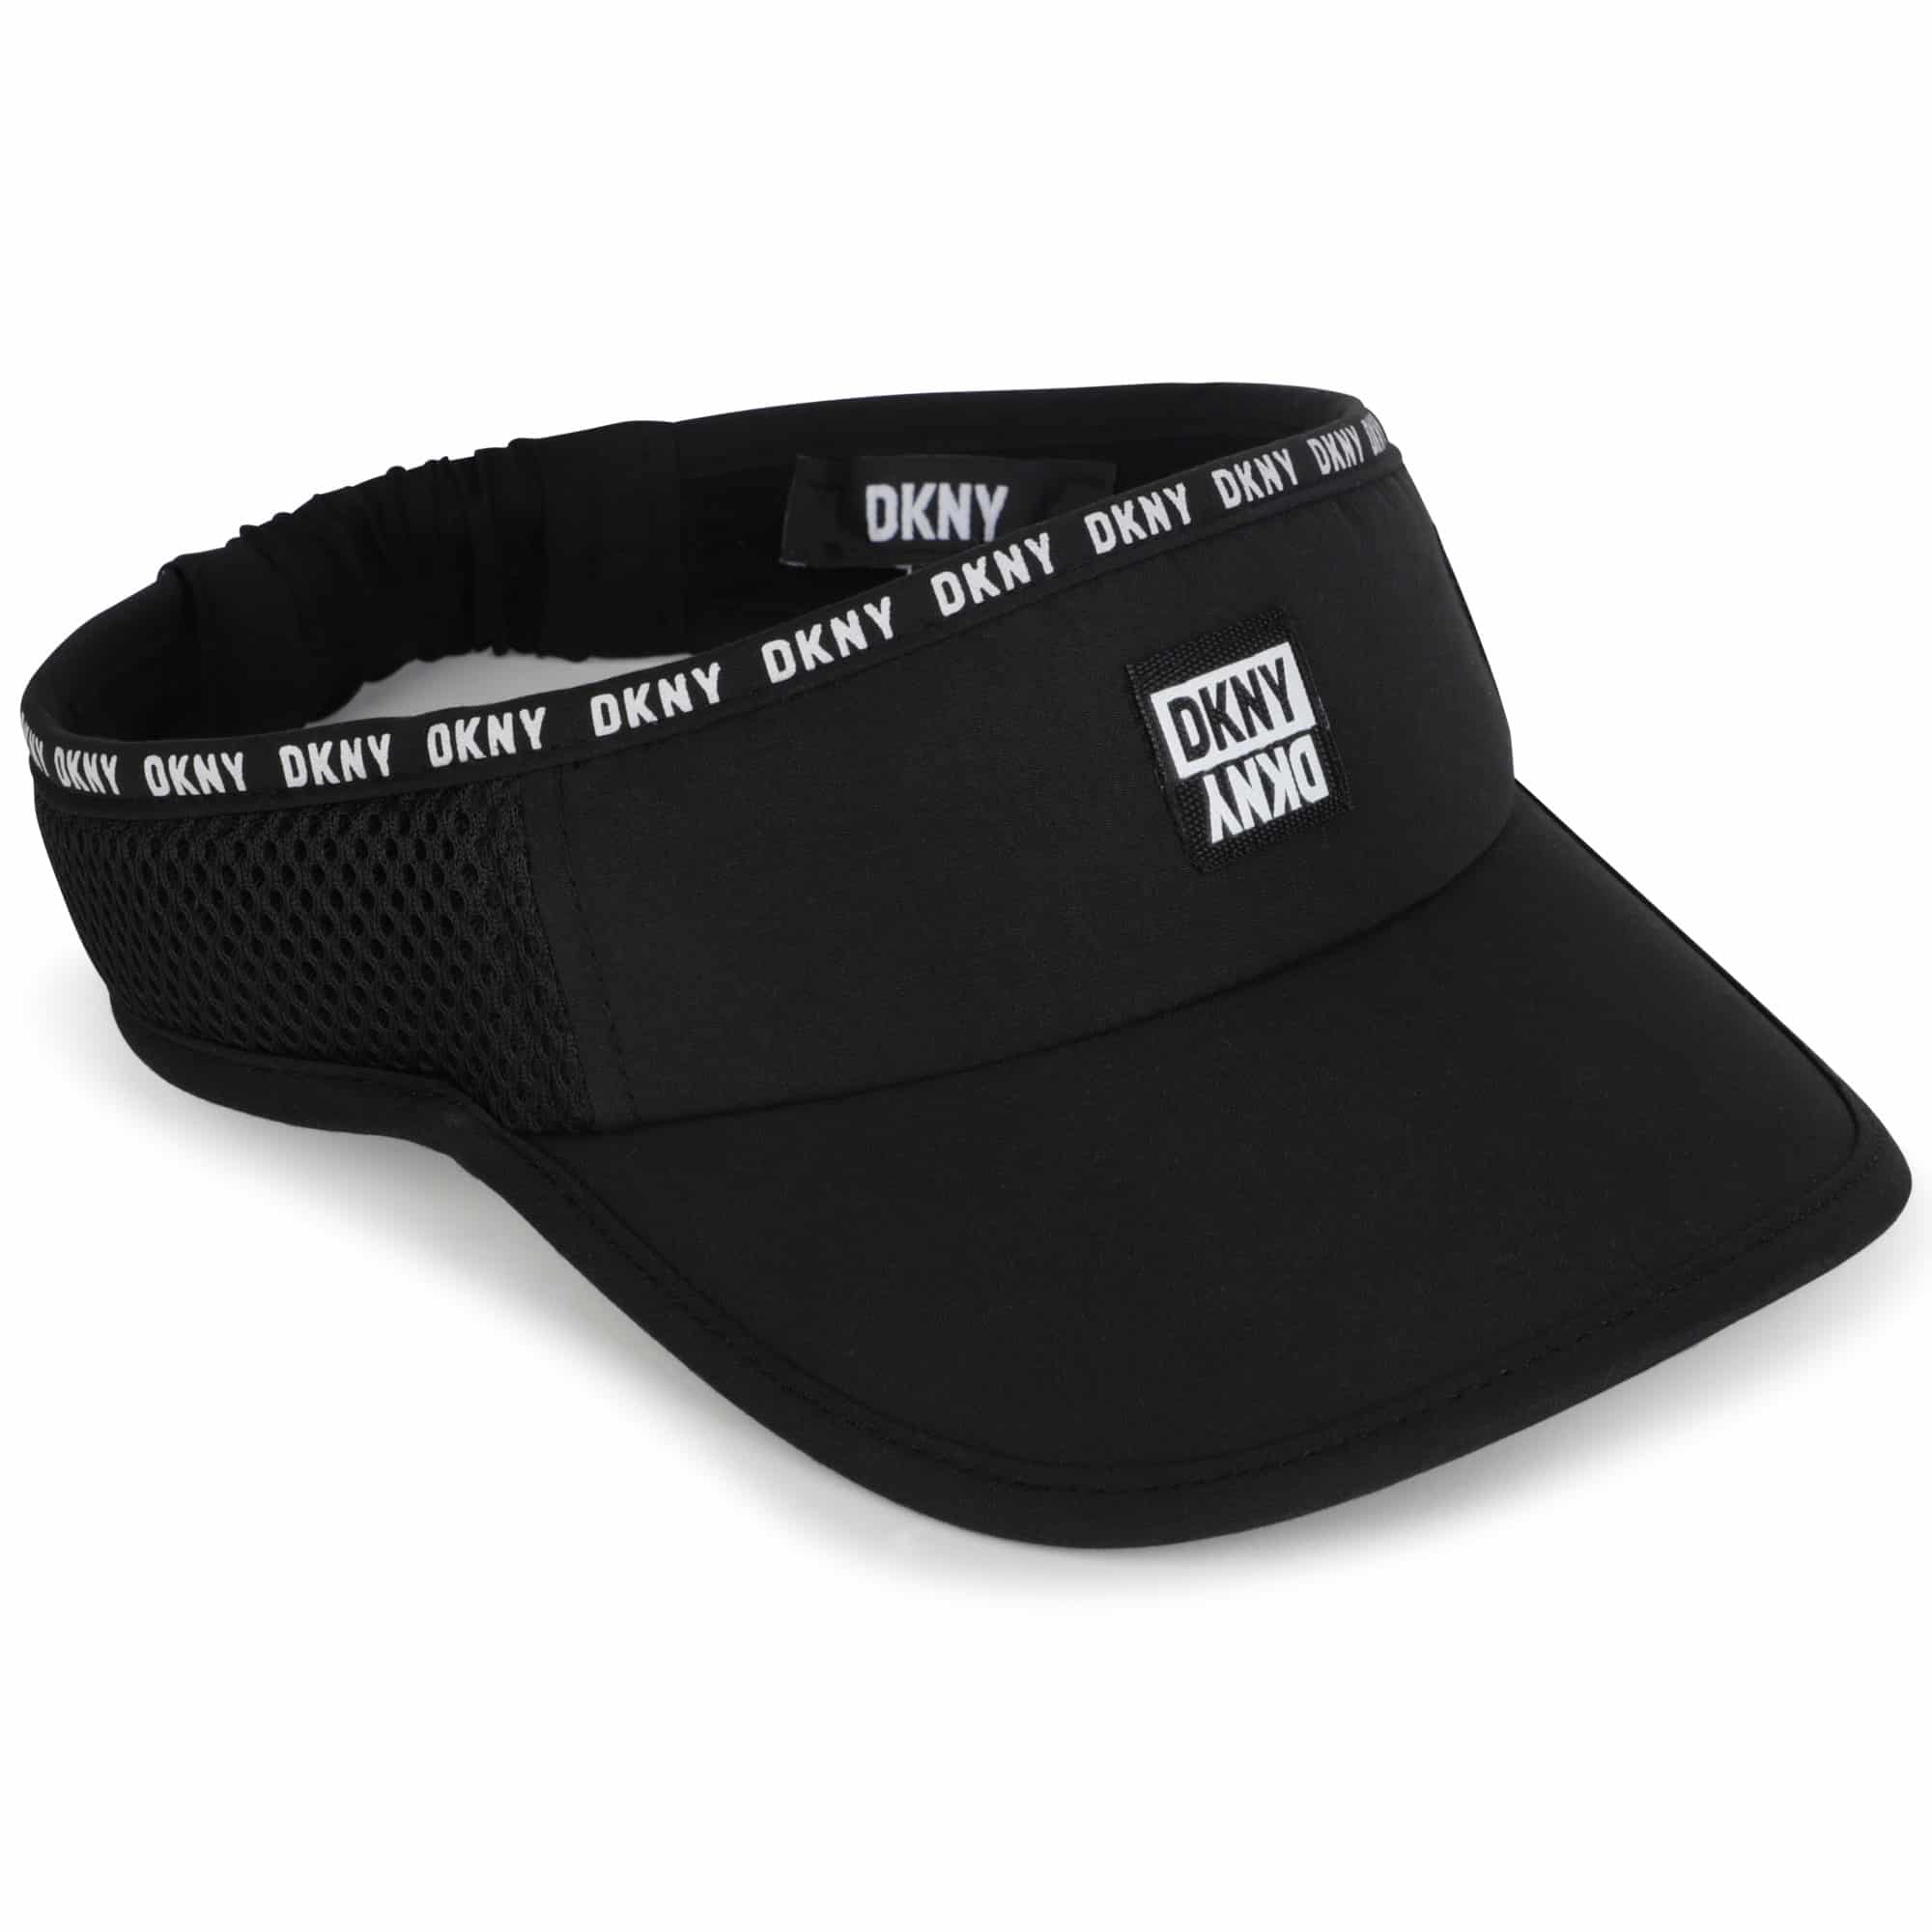 DKNY girls black visor with logos